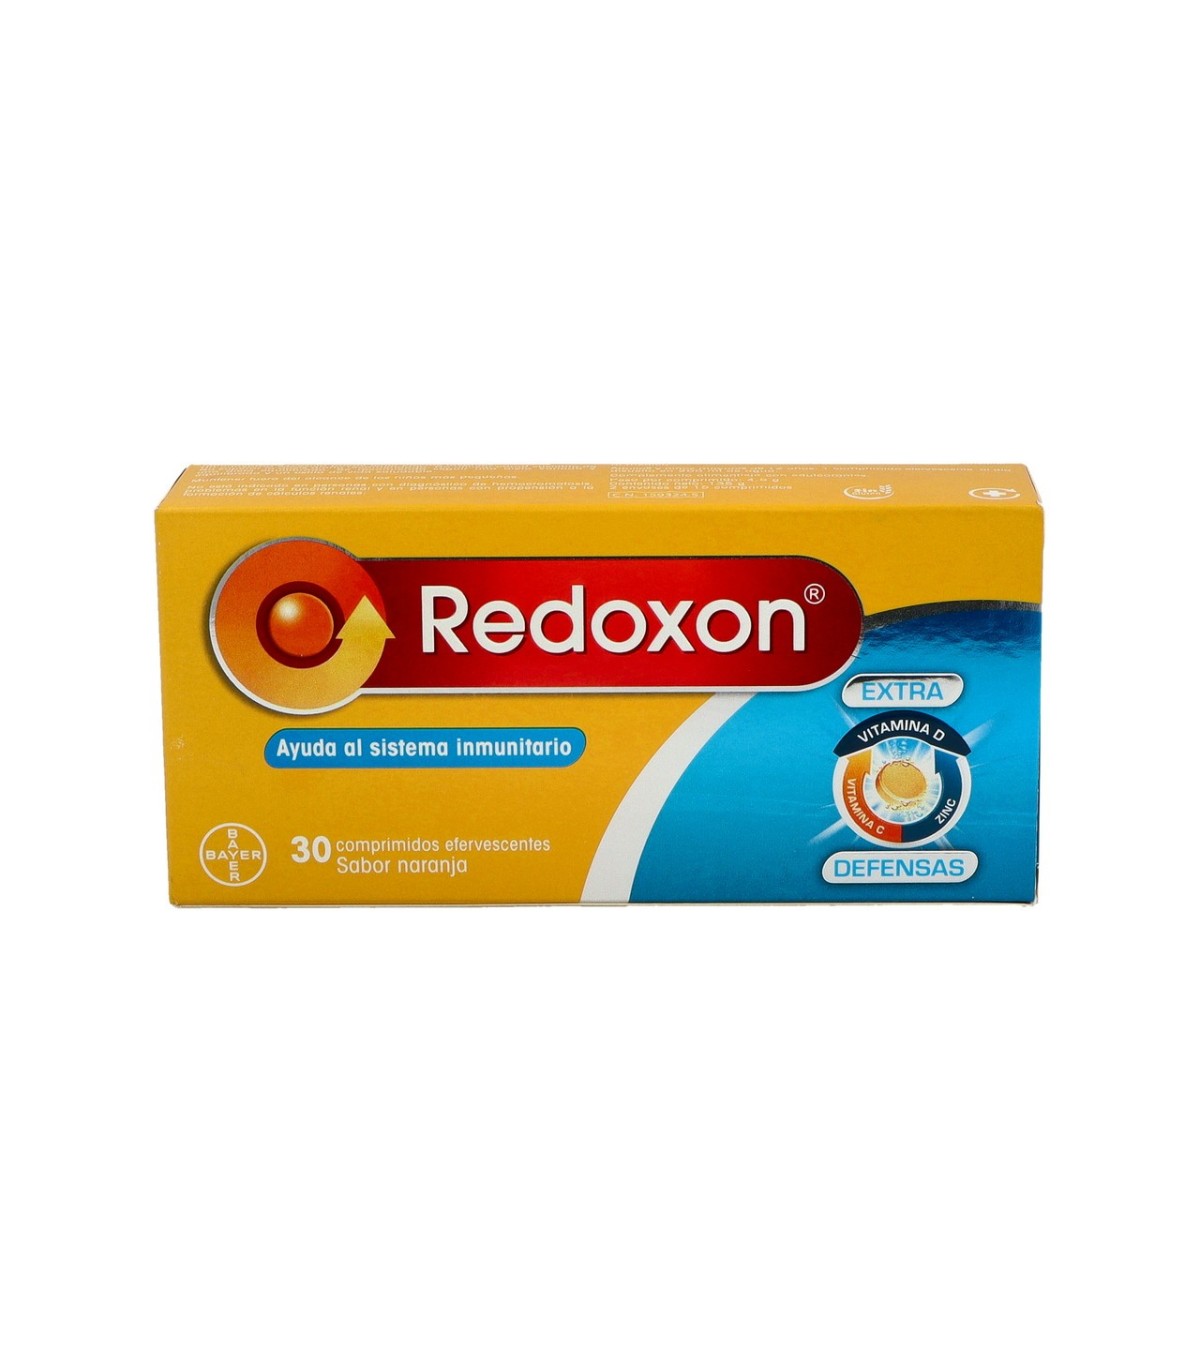 Redoxon Extra Defensas 30